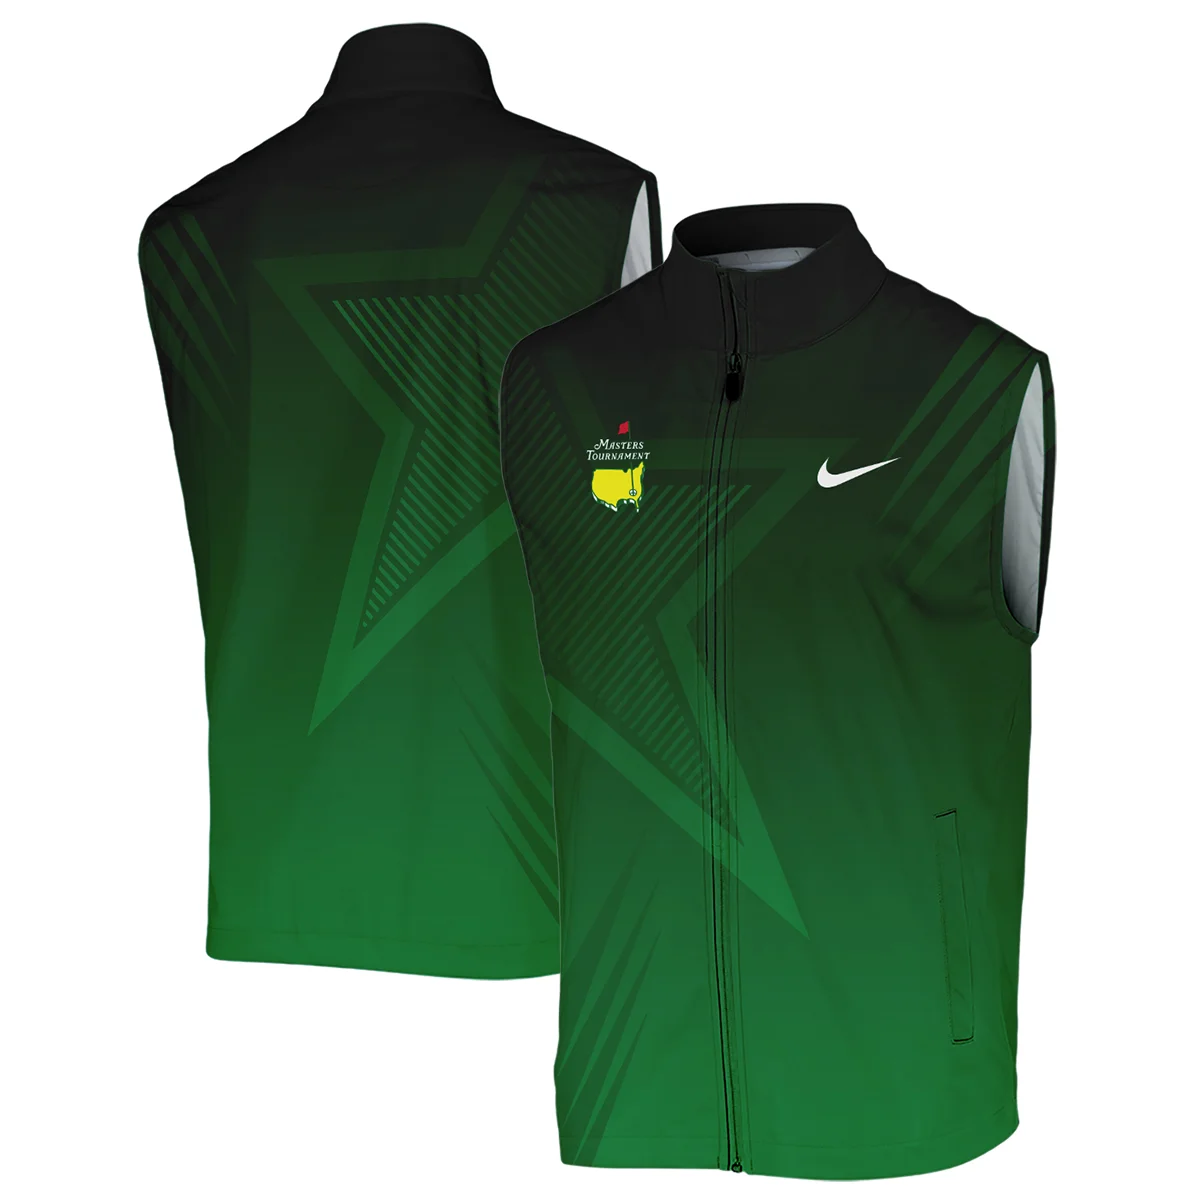 Nike Masters Tournament Polo Shirt Dark Green Gradient Star Pattern Golf Sports Bomber Jacket Style Classic Bomber Jacket